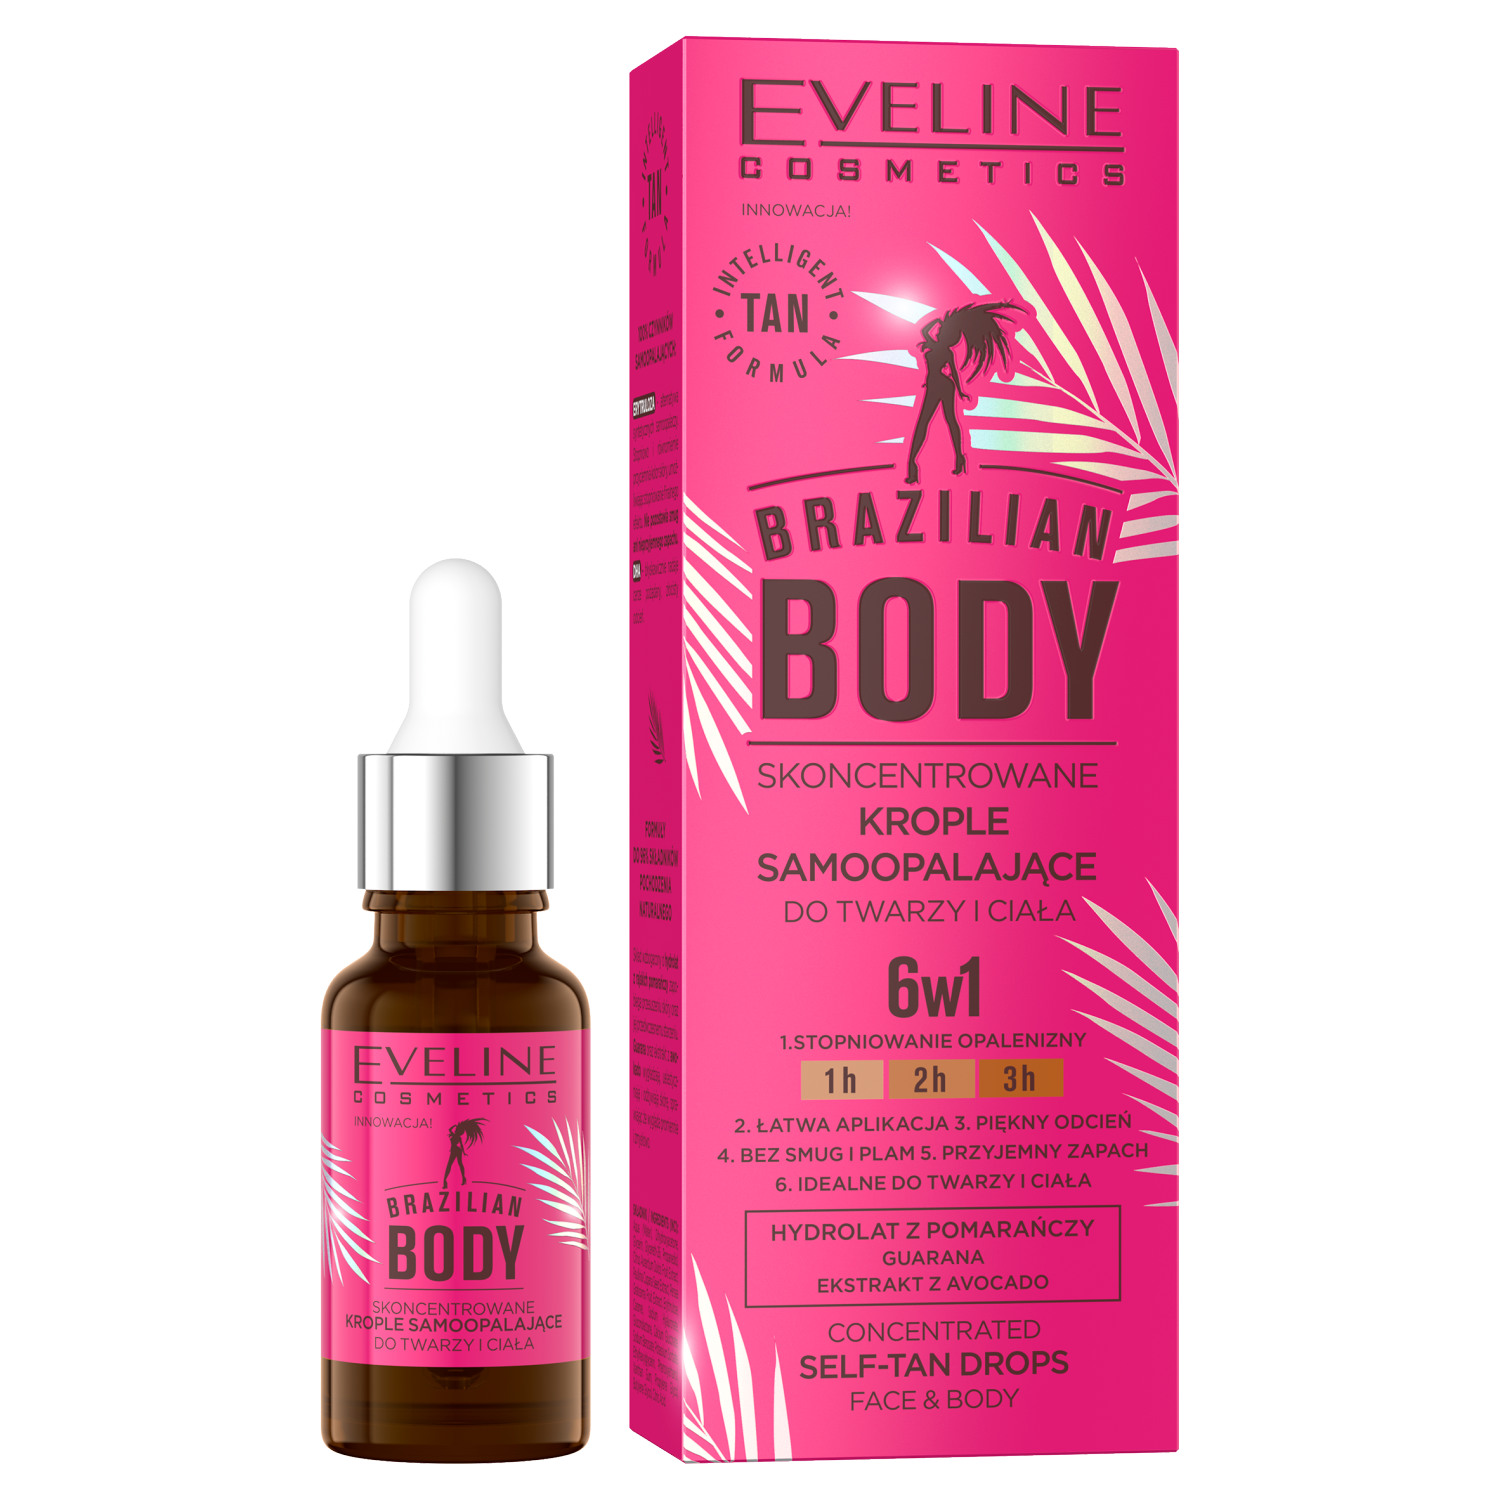 Eveline Cosmetics Brazilian Body бронзирующие капли для тела, 18 мл